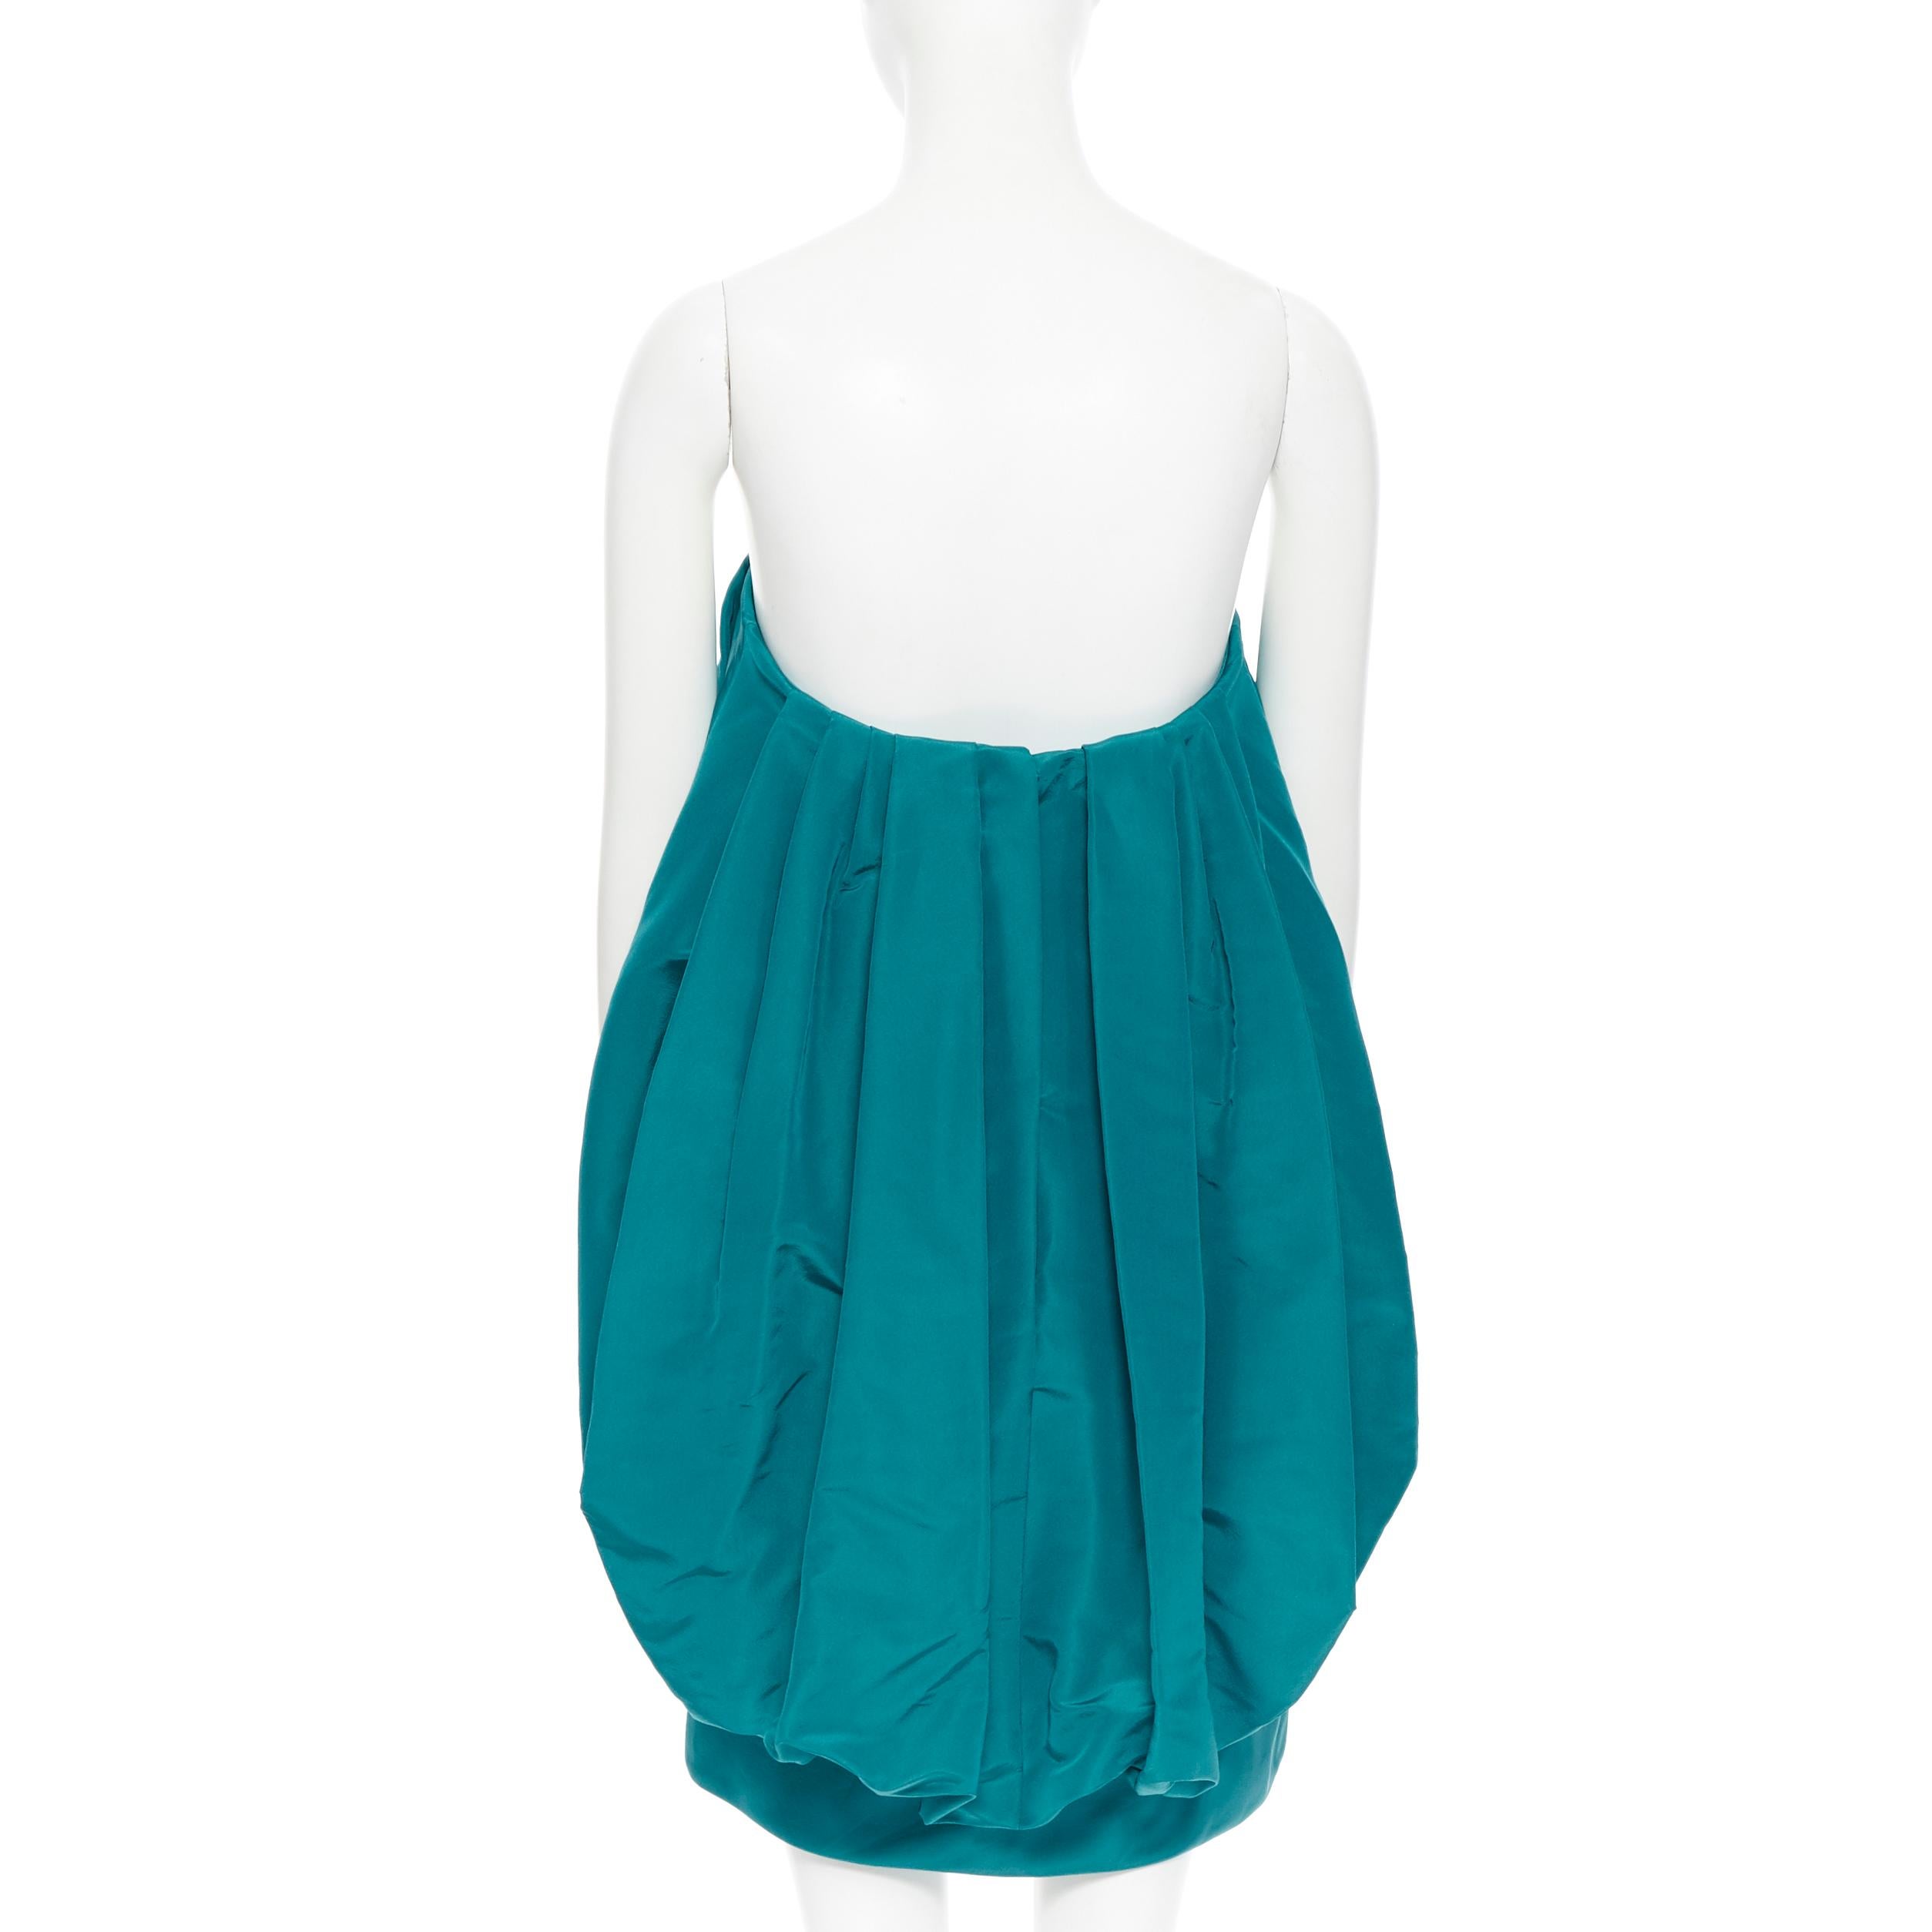 Green OSCAR DE LA RENTA AW13 100% silk green corset voluminous bubble dress US4 S